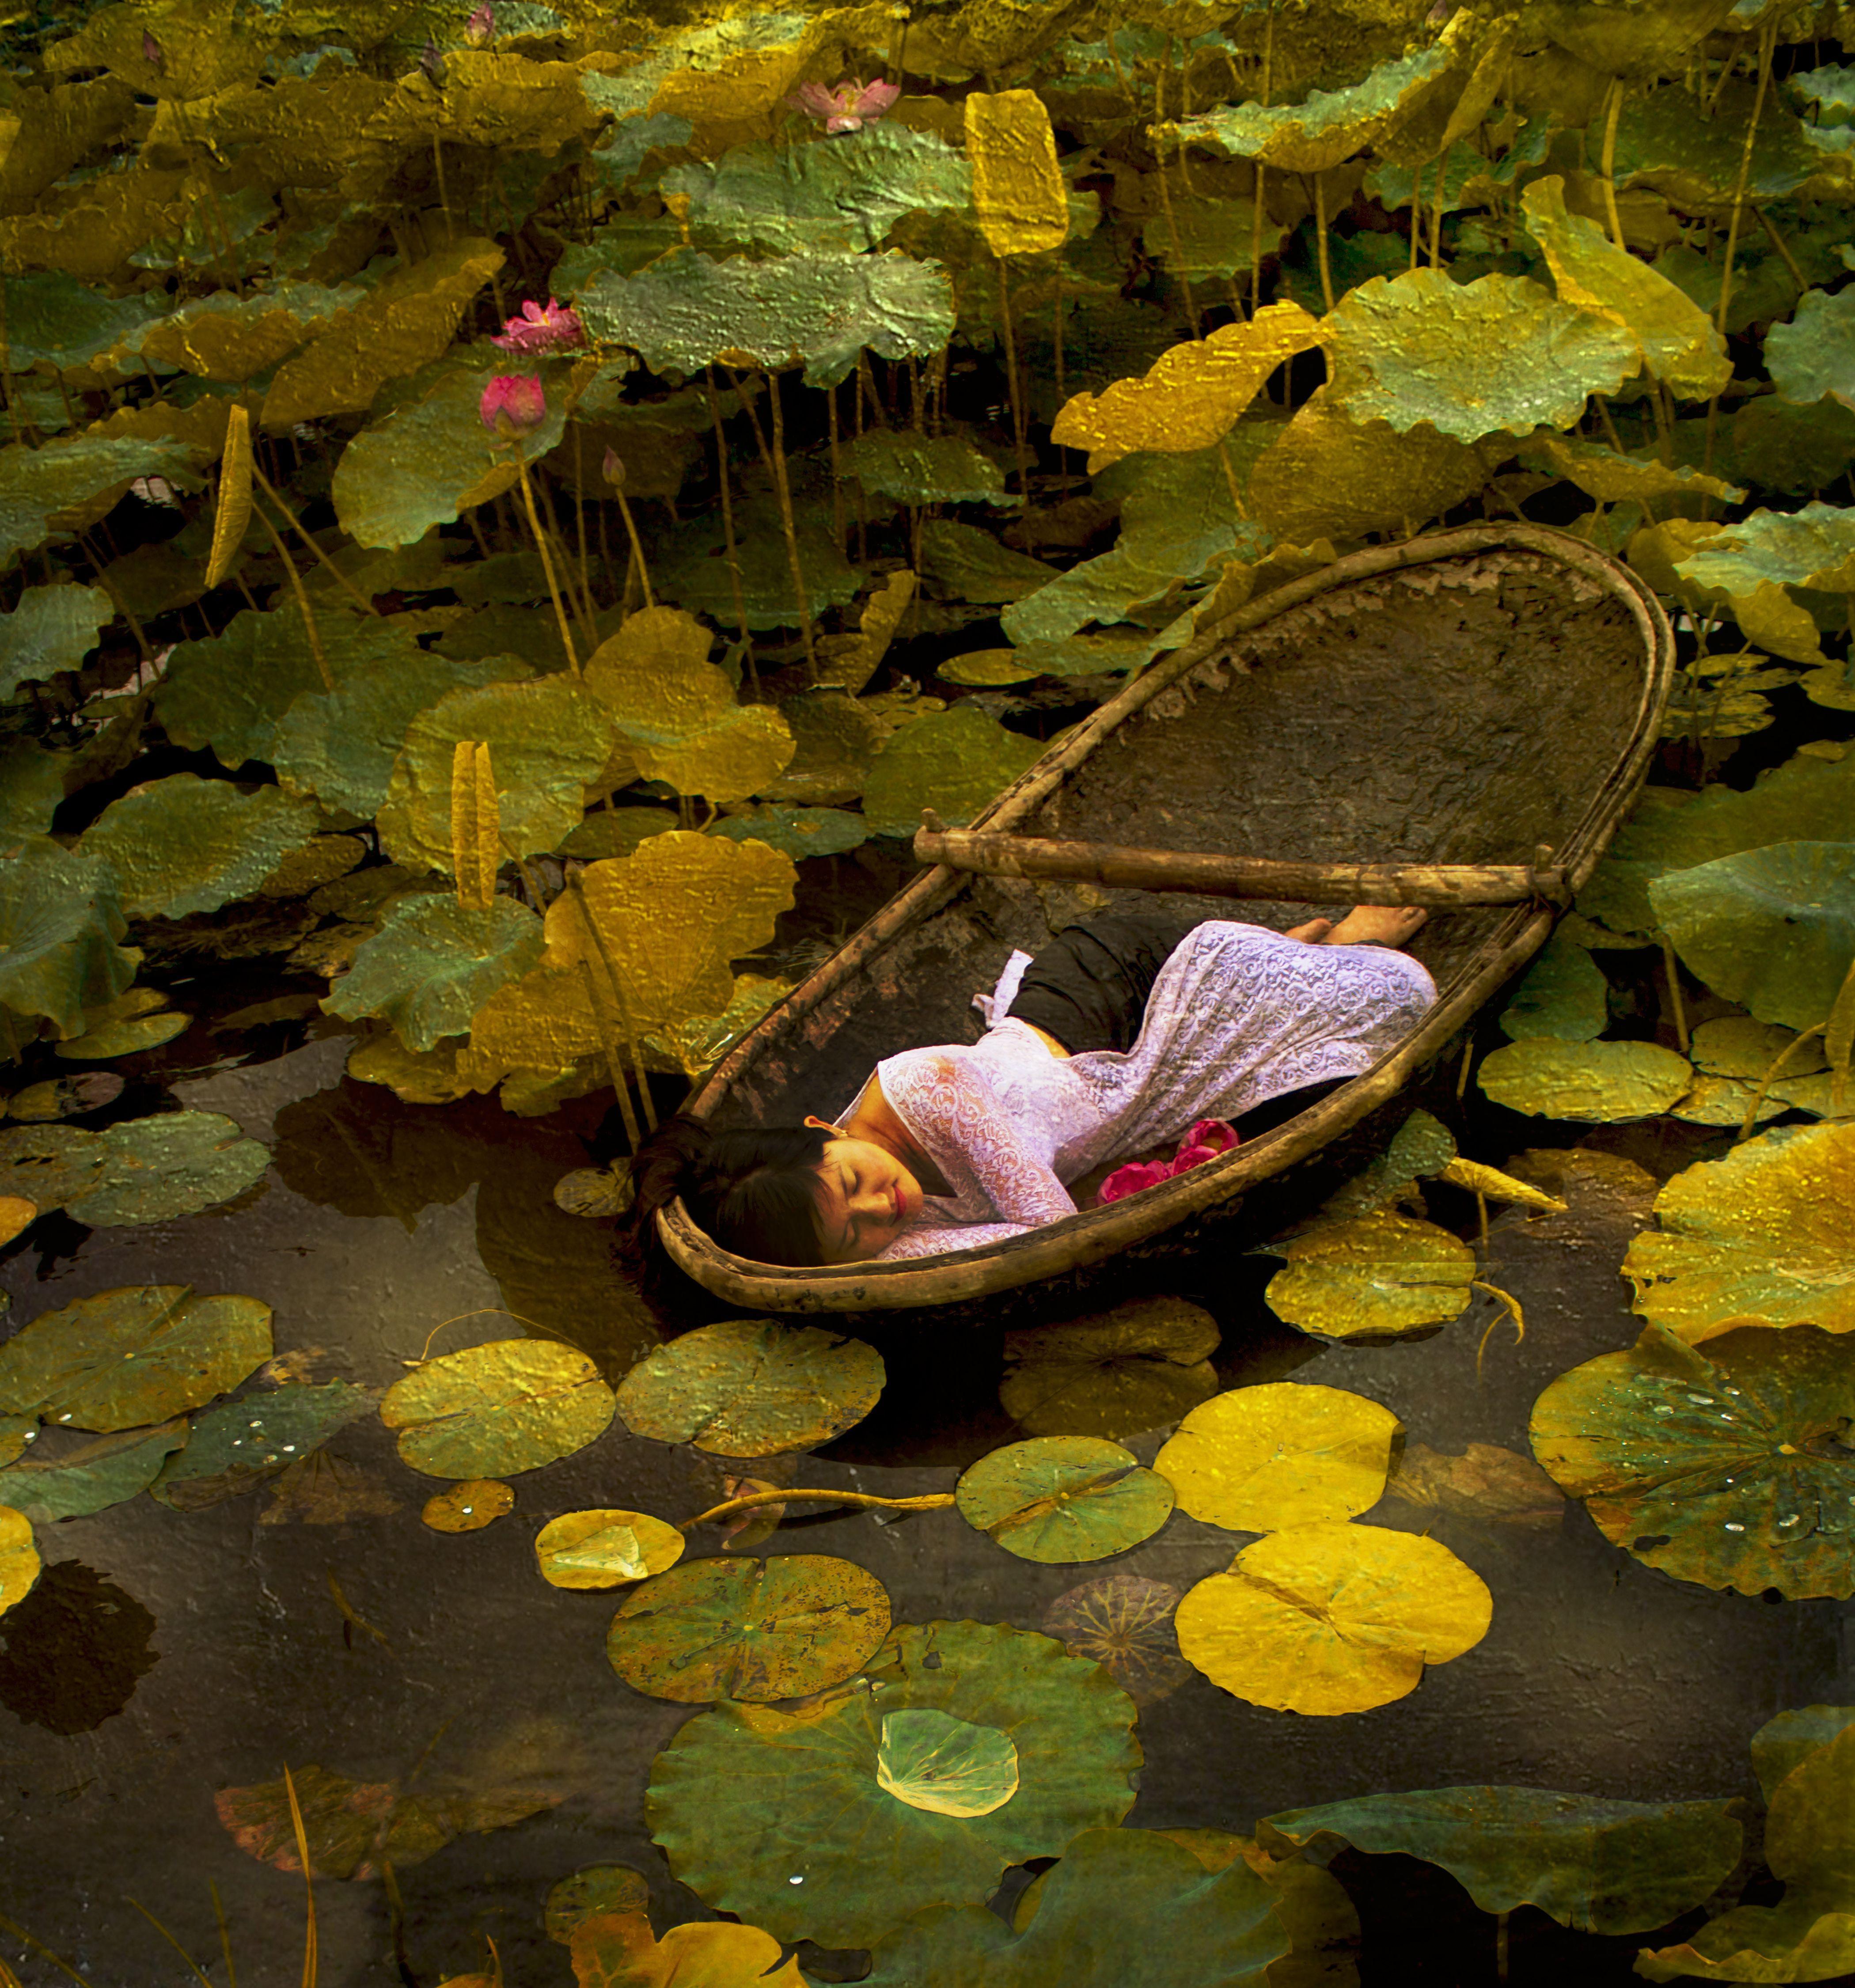 Viet Ha Tran Color Photograph - The Golden Lotus Lake, Photograph, C-Type